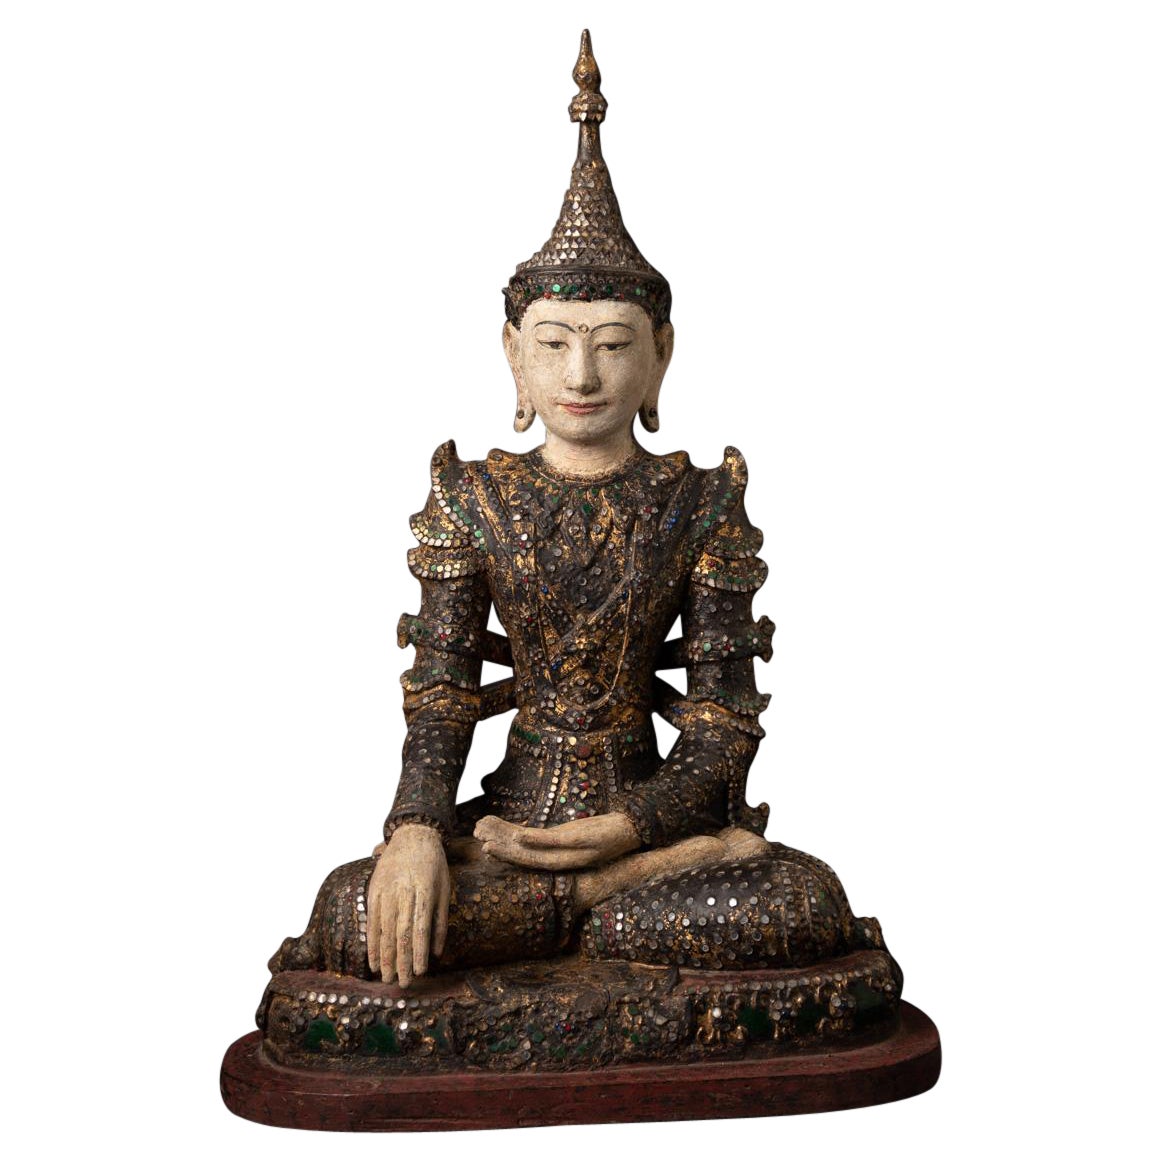 18th century - Konebaung period antique wooden Burmese Buddha statue